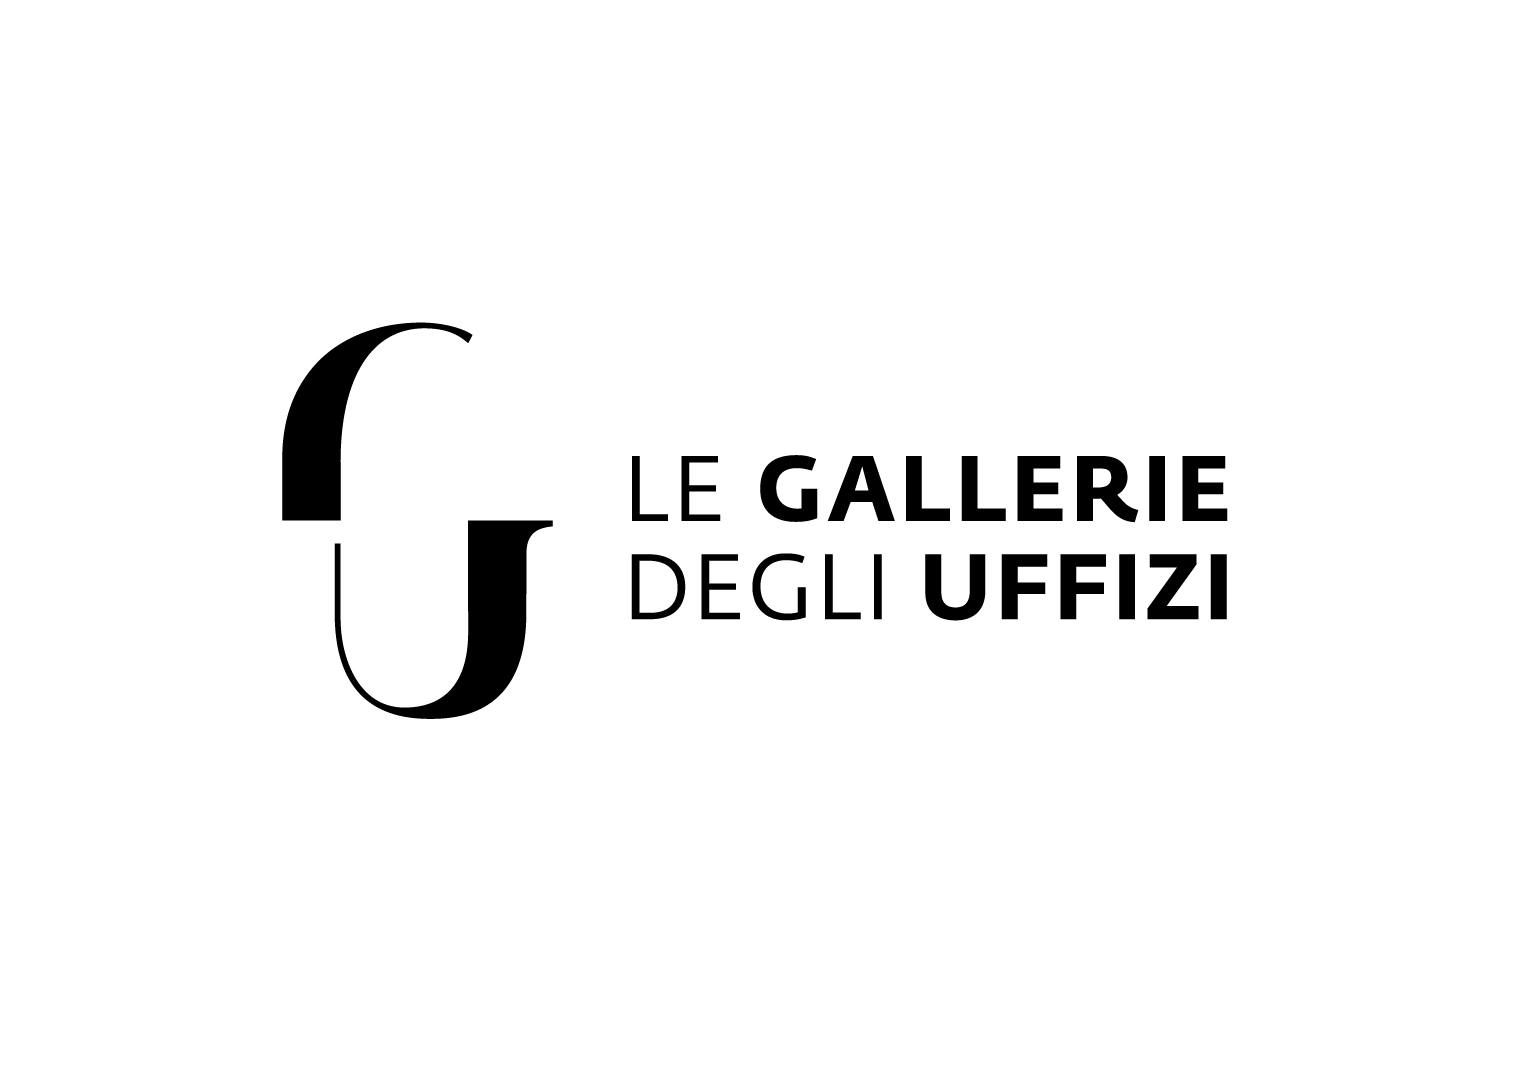 Branding for the Uffizi Galleries